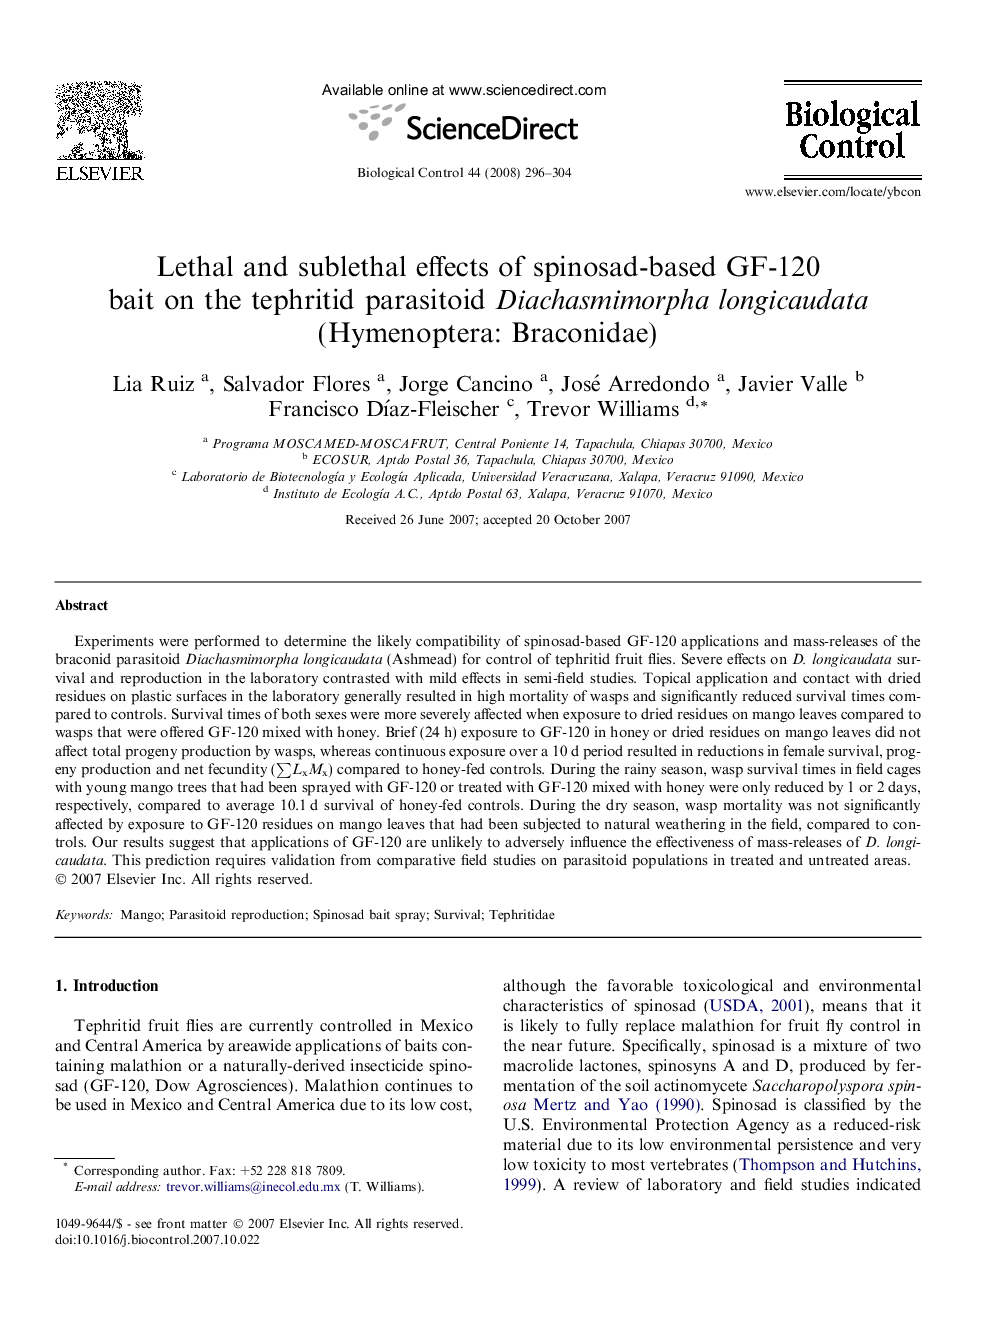 Lethal and sublethal effects of spinosad-based GF-120 bait on the tephritid parasitoid Diachasmimorpha longicaudata (Hymenoptera: Braconidae)